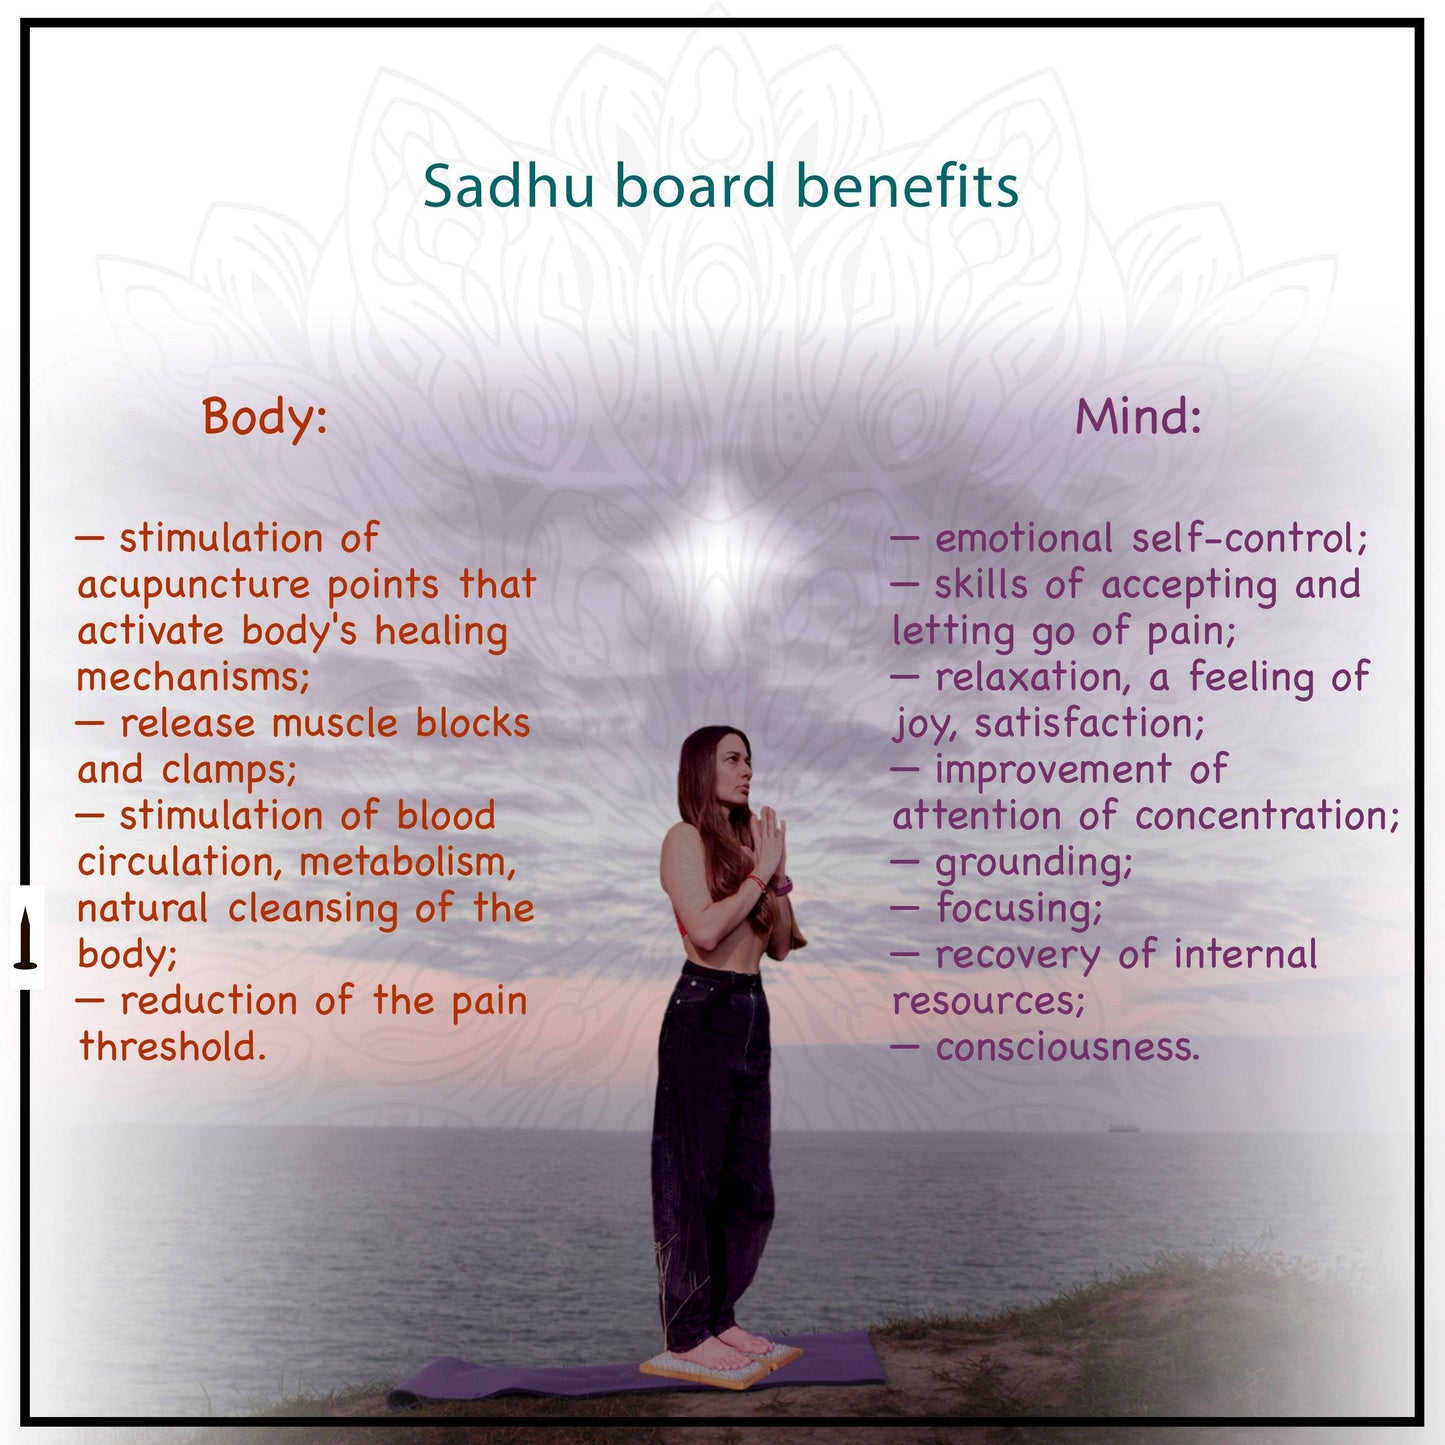 Girl standing on sadhu board on seashore. benefits of sadhu board for body and mind